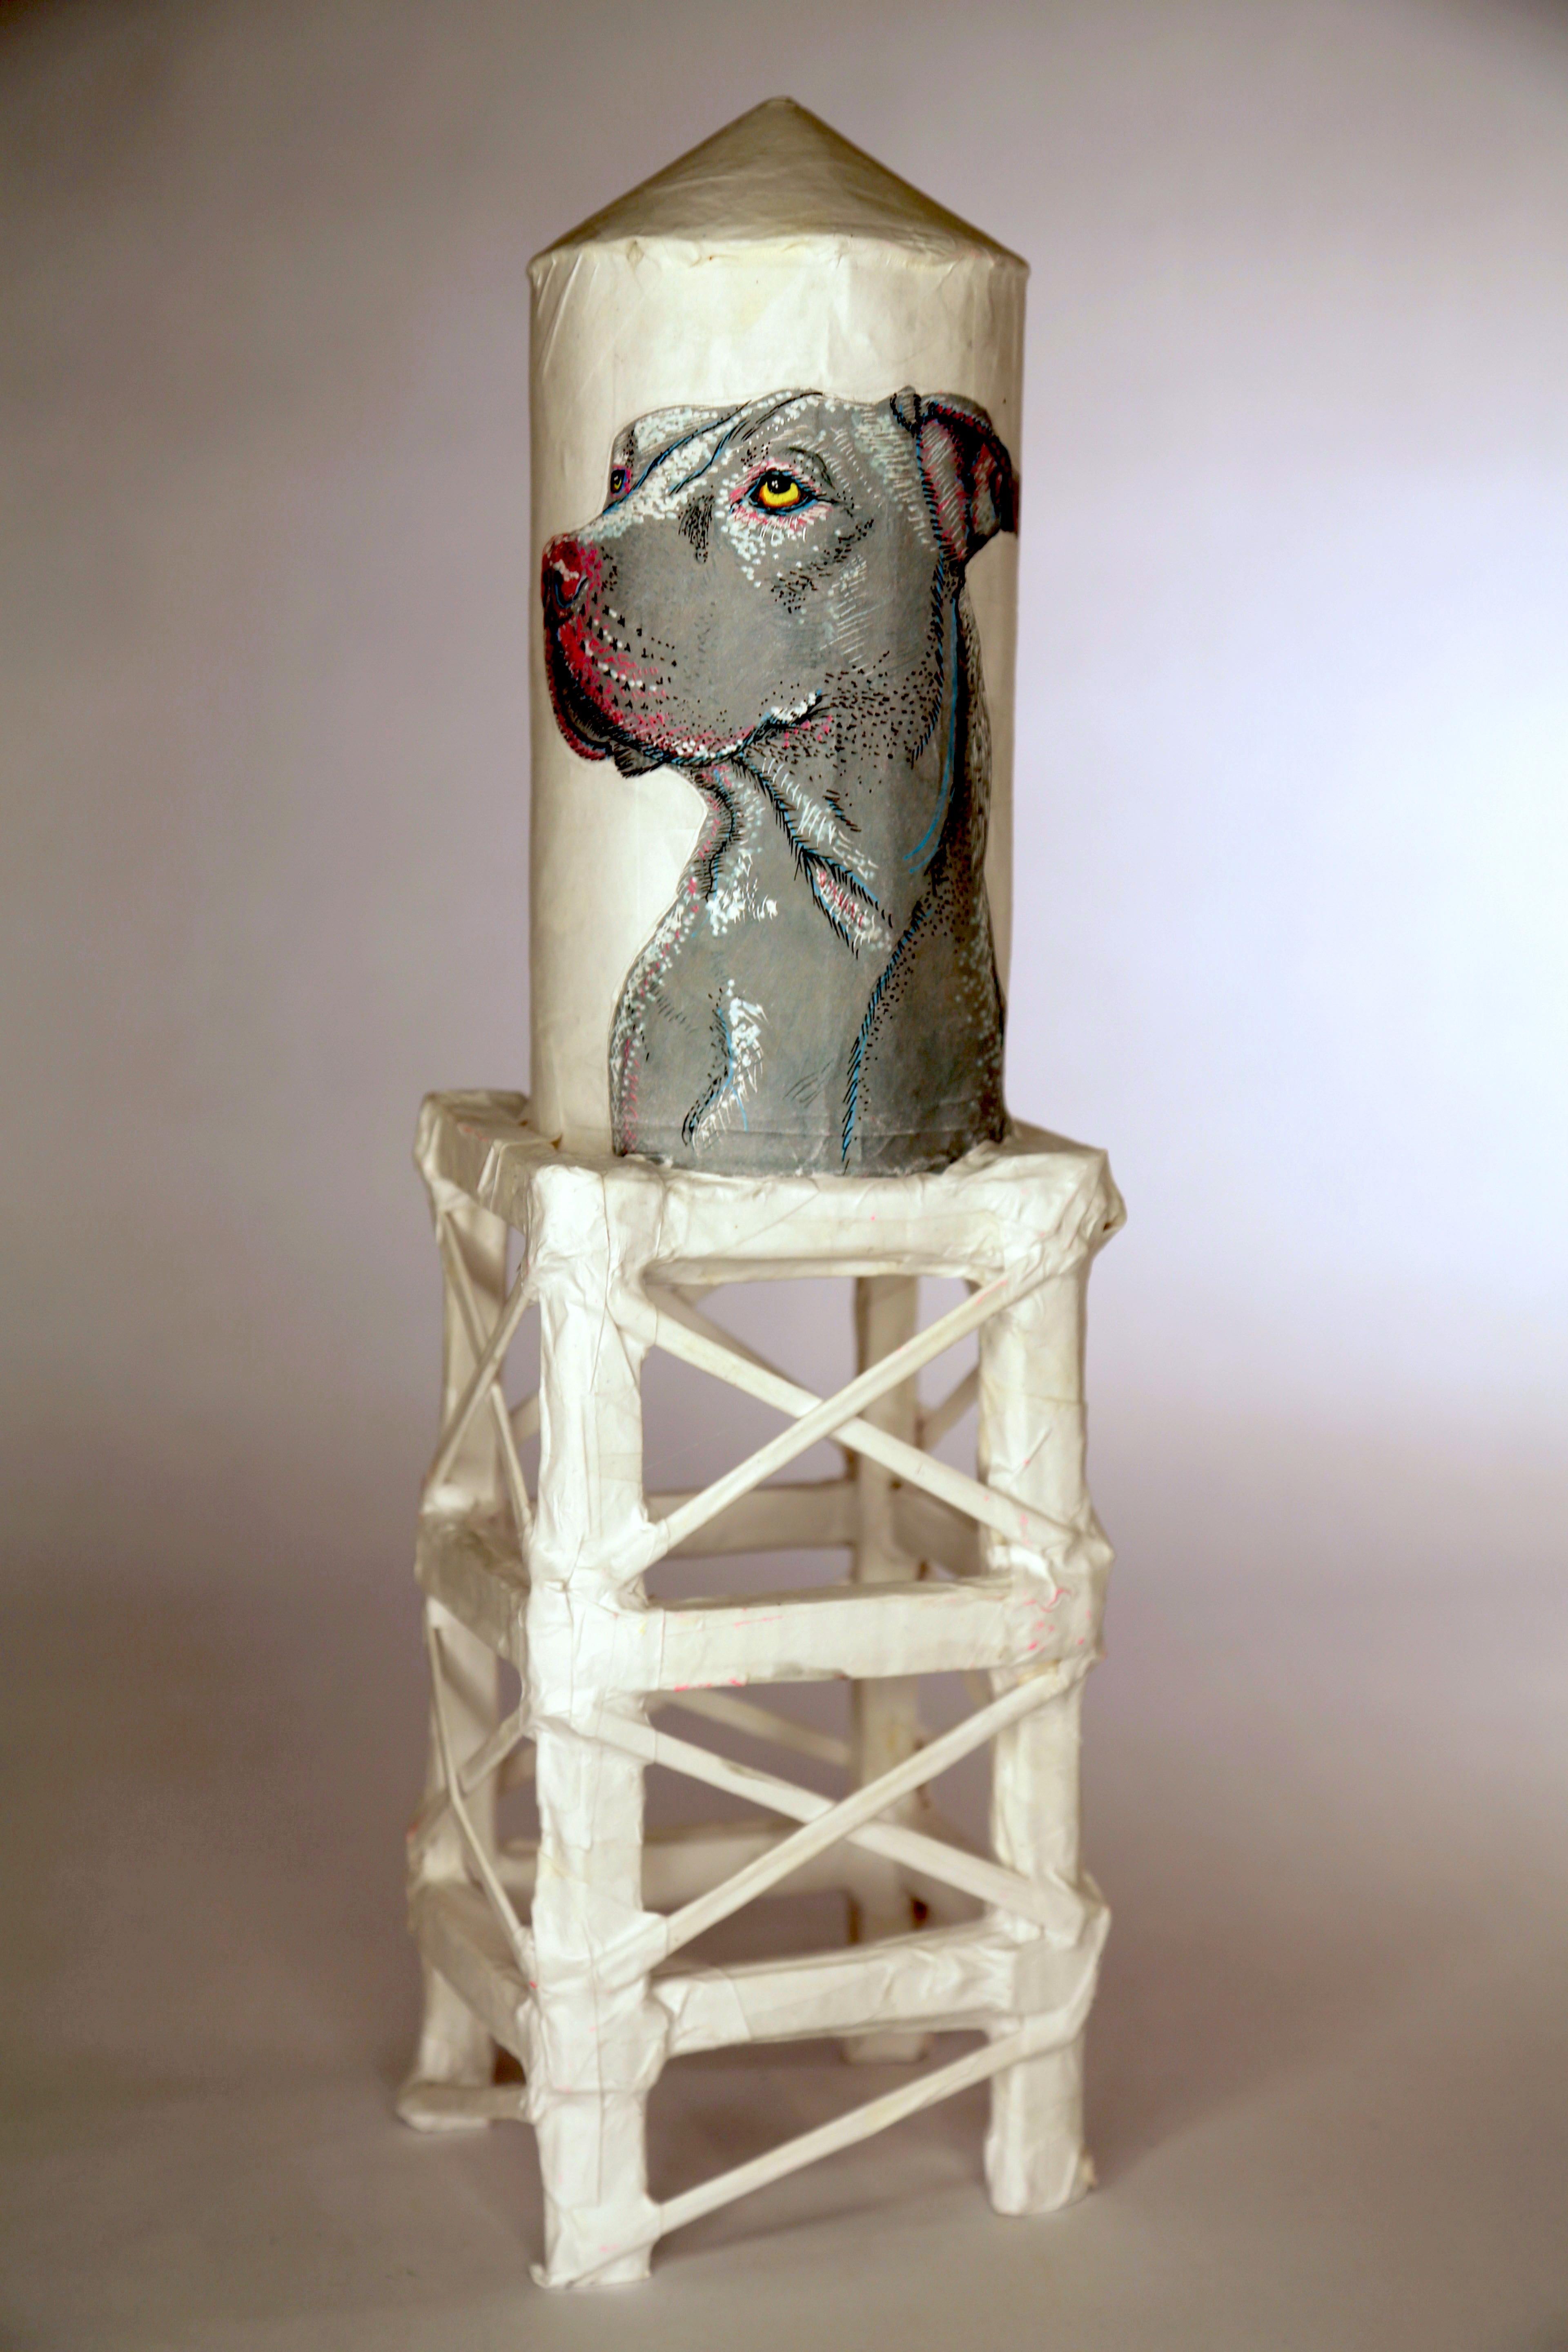  Water Tower Sculpture: 'Grey Dog'  - Mixed Media Art by Ethan Minsker